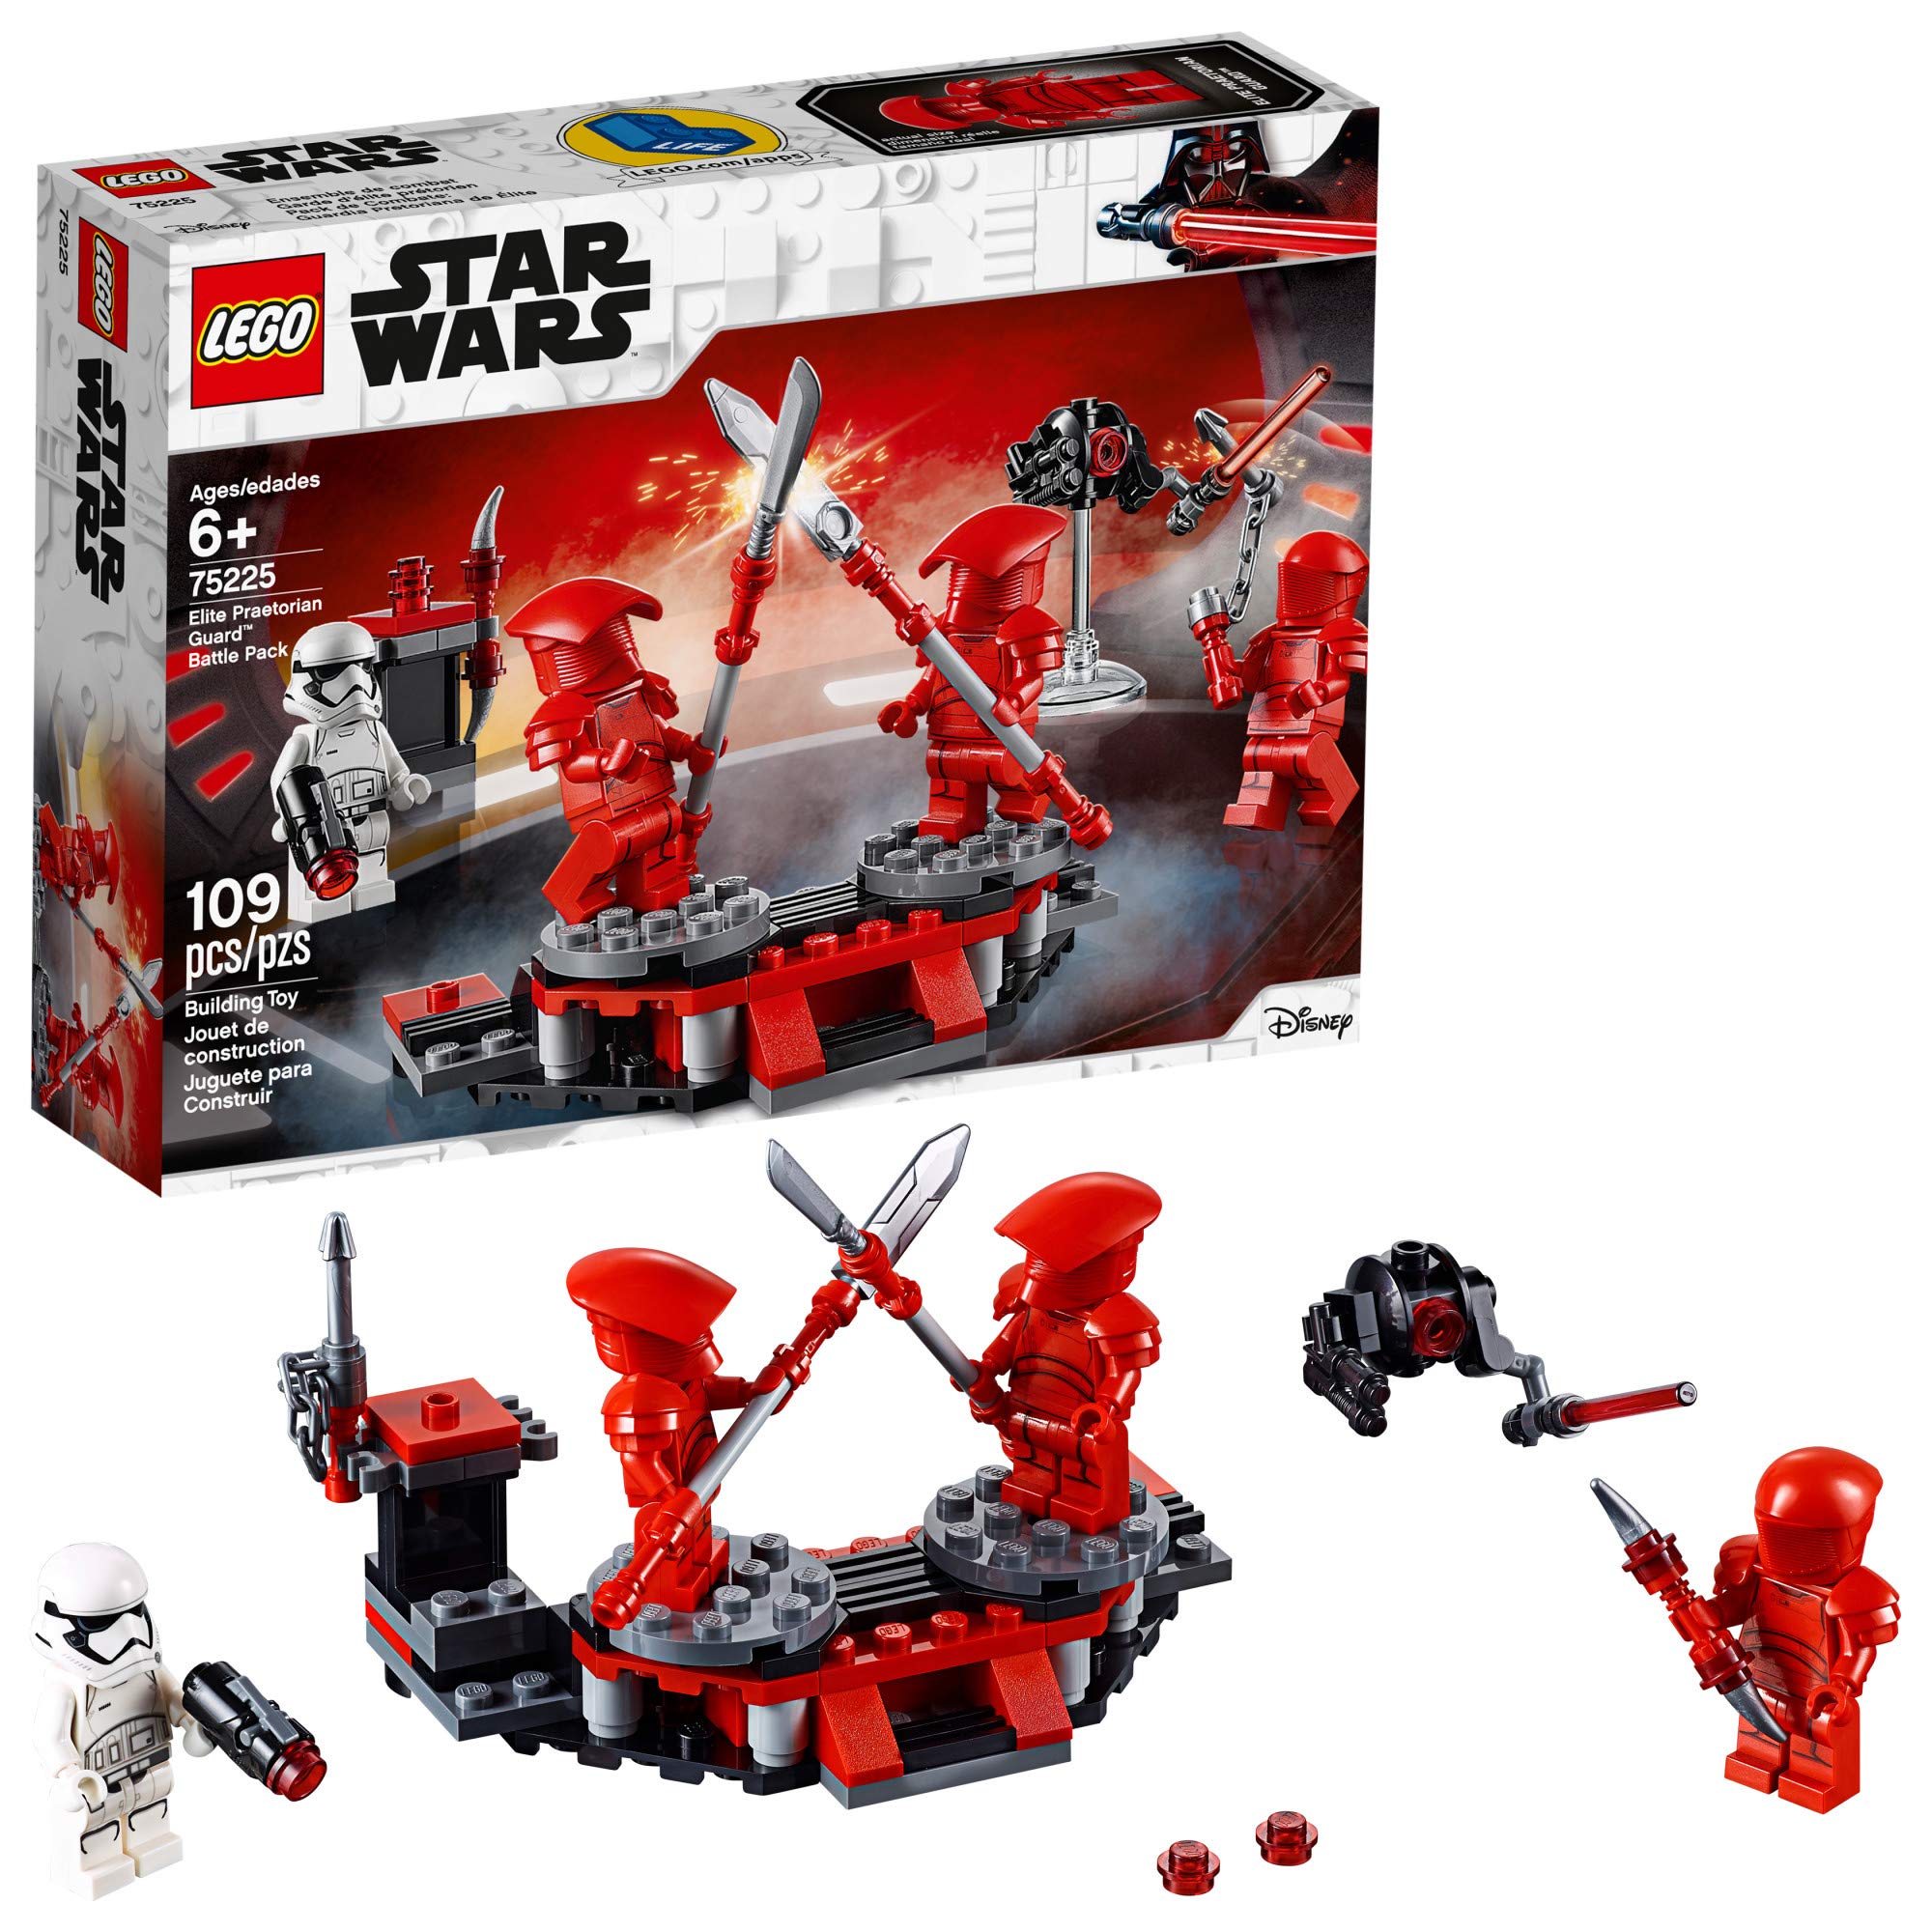 Book Cover LEGO Star Wars: The Last Jedi Elite Praetorian Guard Battle Pack 75225 Building Kit (109 Pieces) (Discontinued by Manufacturer)